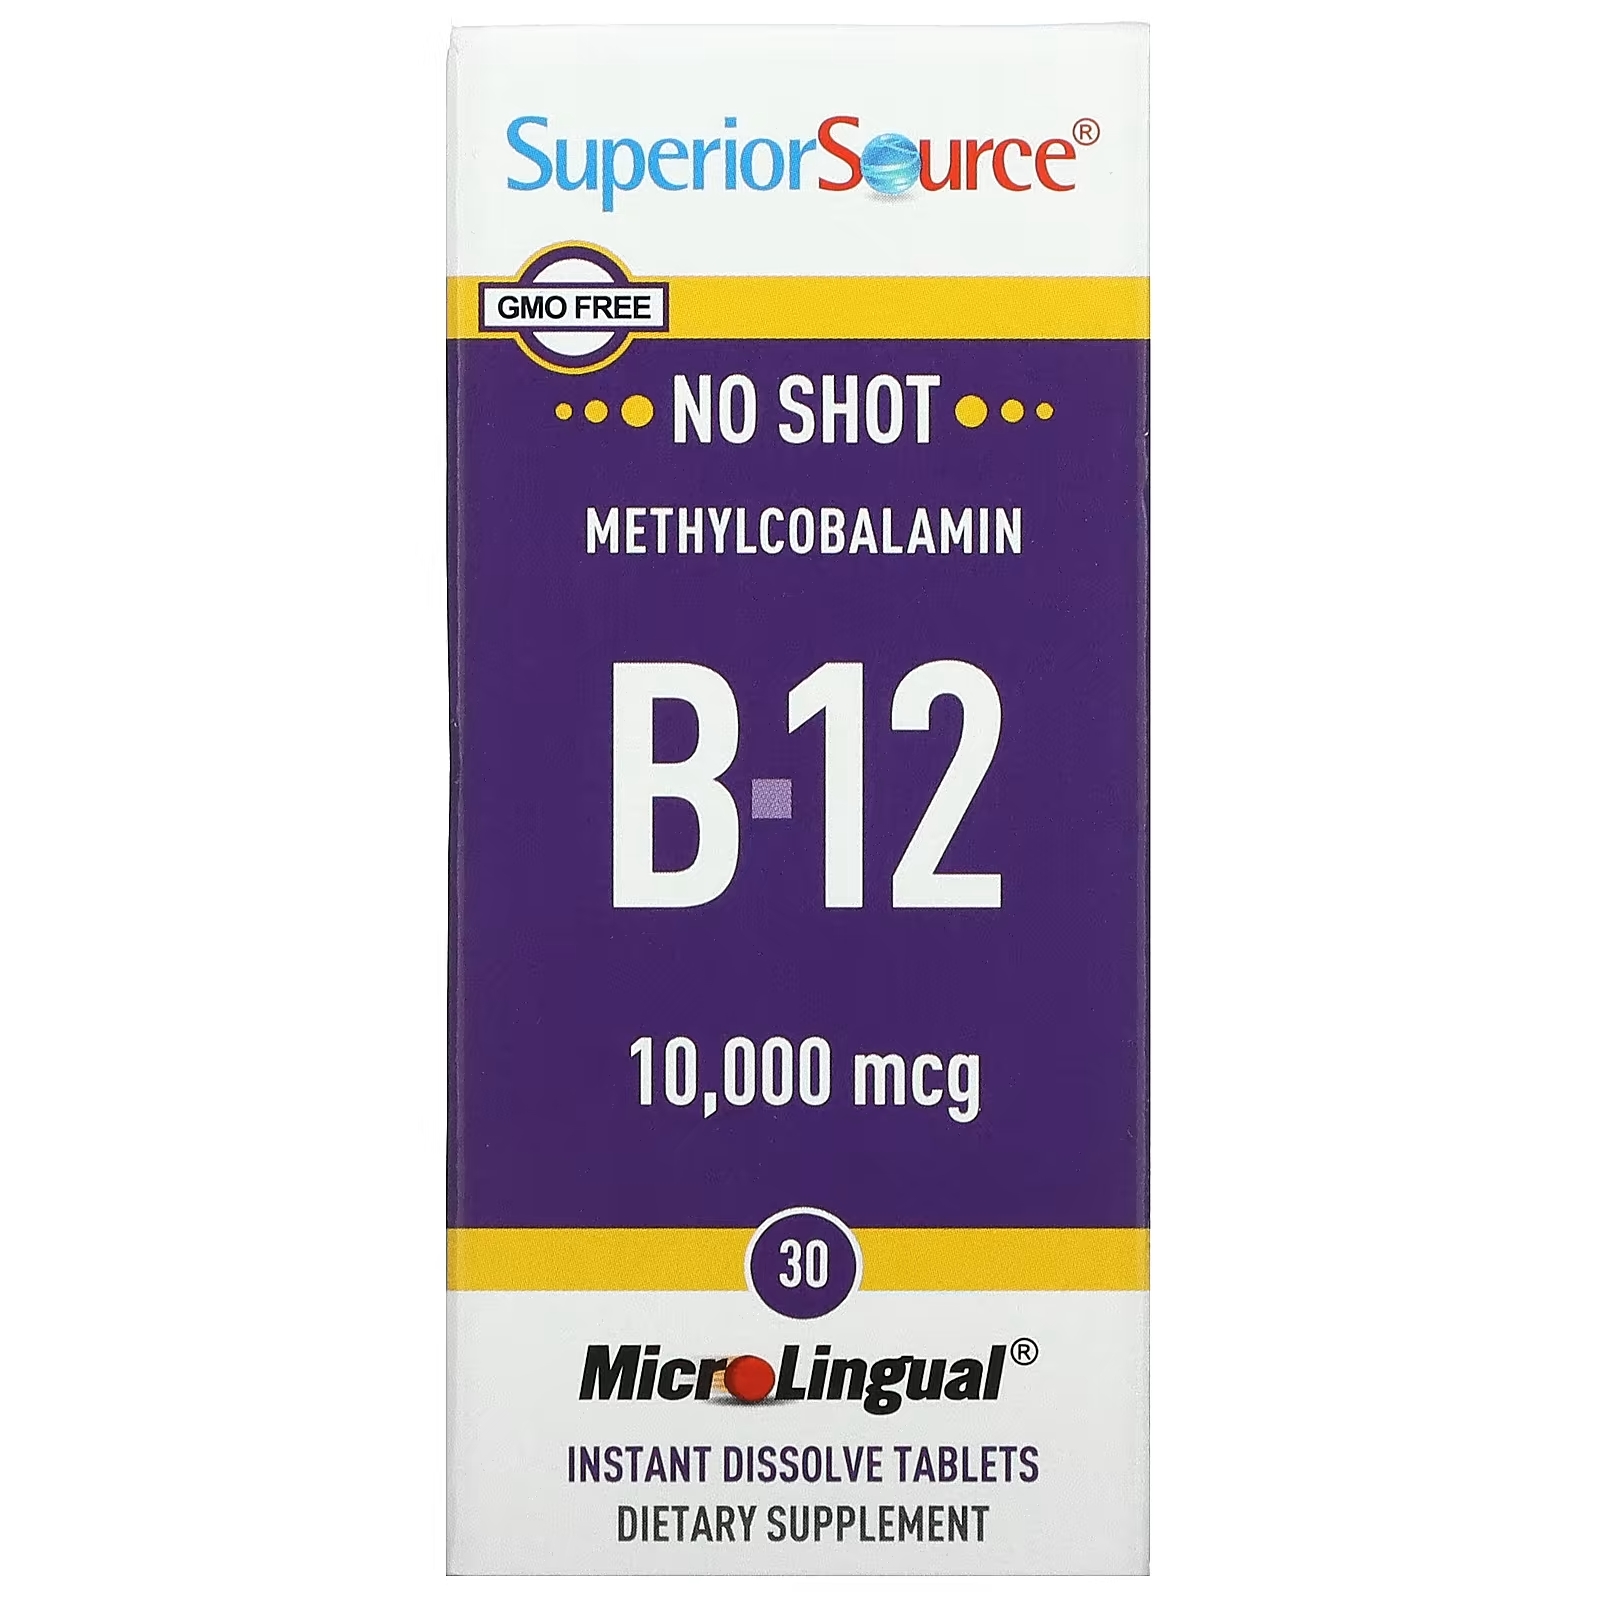 Superior Source метилкобаламин B12 10 000 мкг, 30 таблеток superior source метилкобаламин b12 5000 мкг 60 микролингвальных таблеток